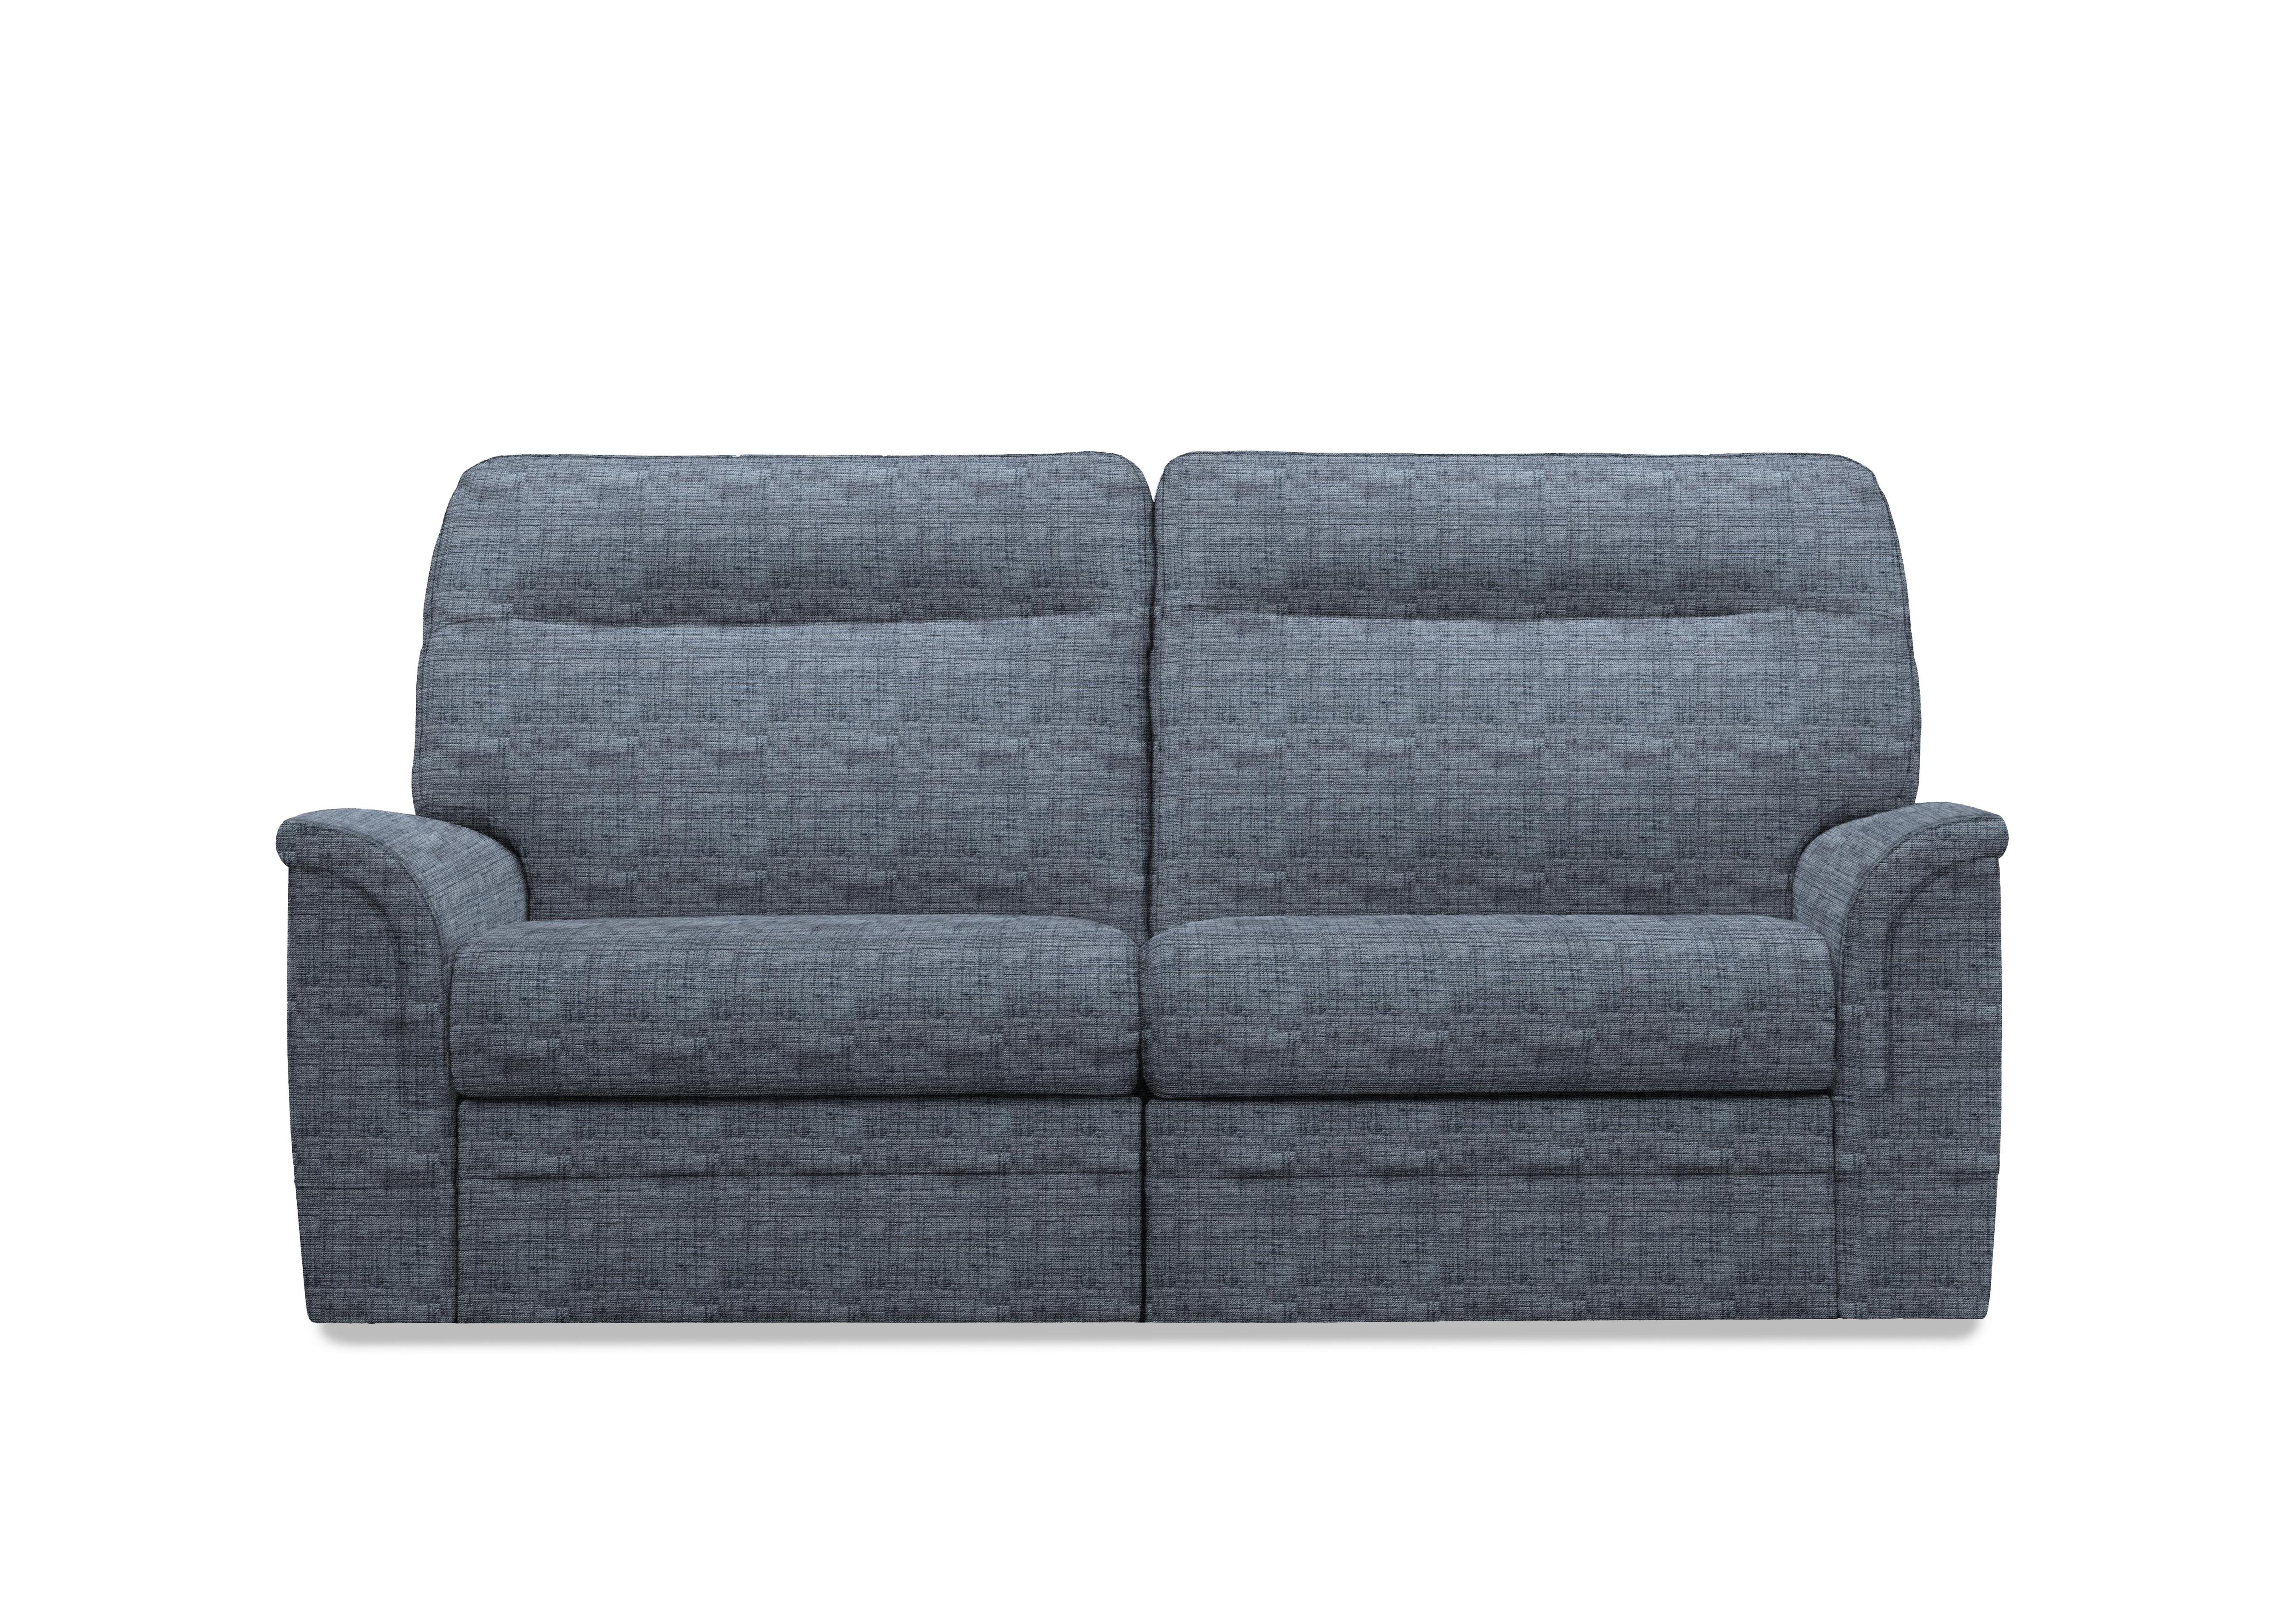 Hudson 23 Large 2 Seater Fabric Sofa in Dash Blue 001497-0080 on Furniture Village